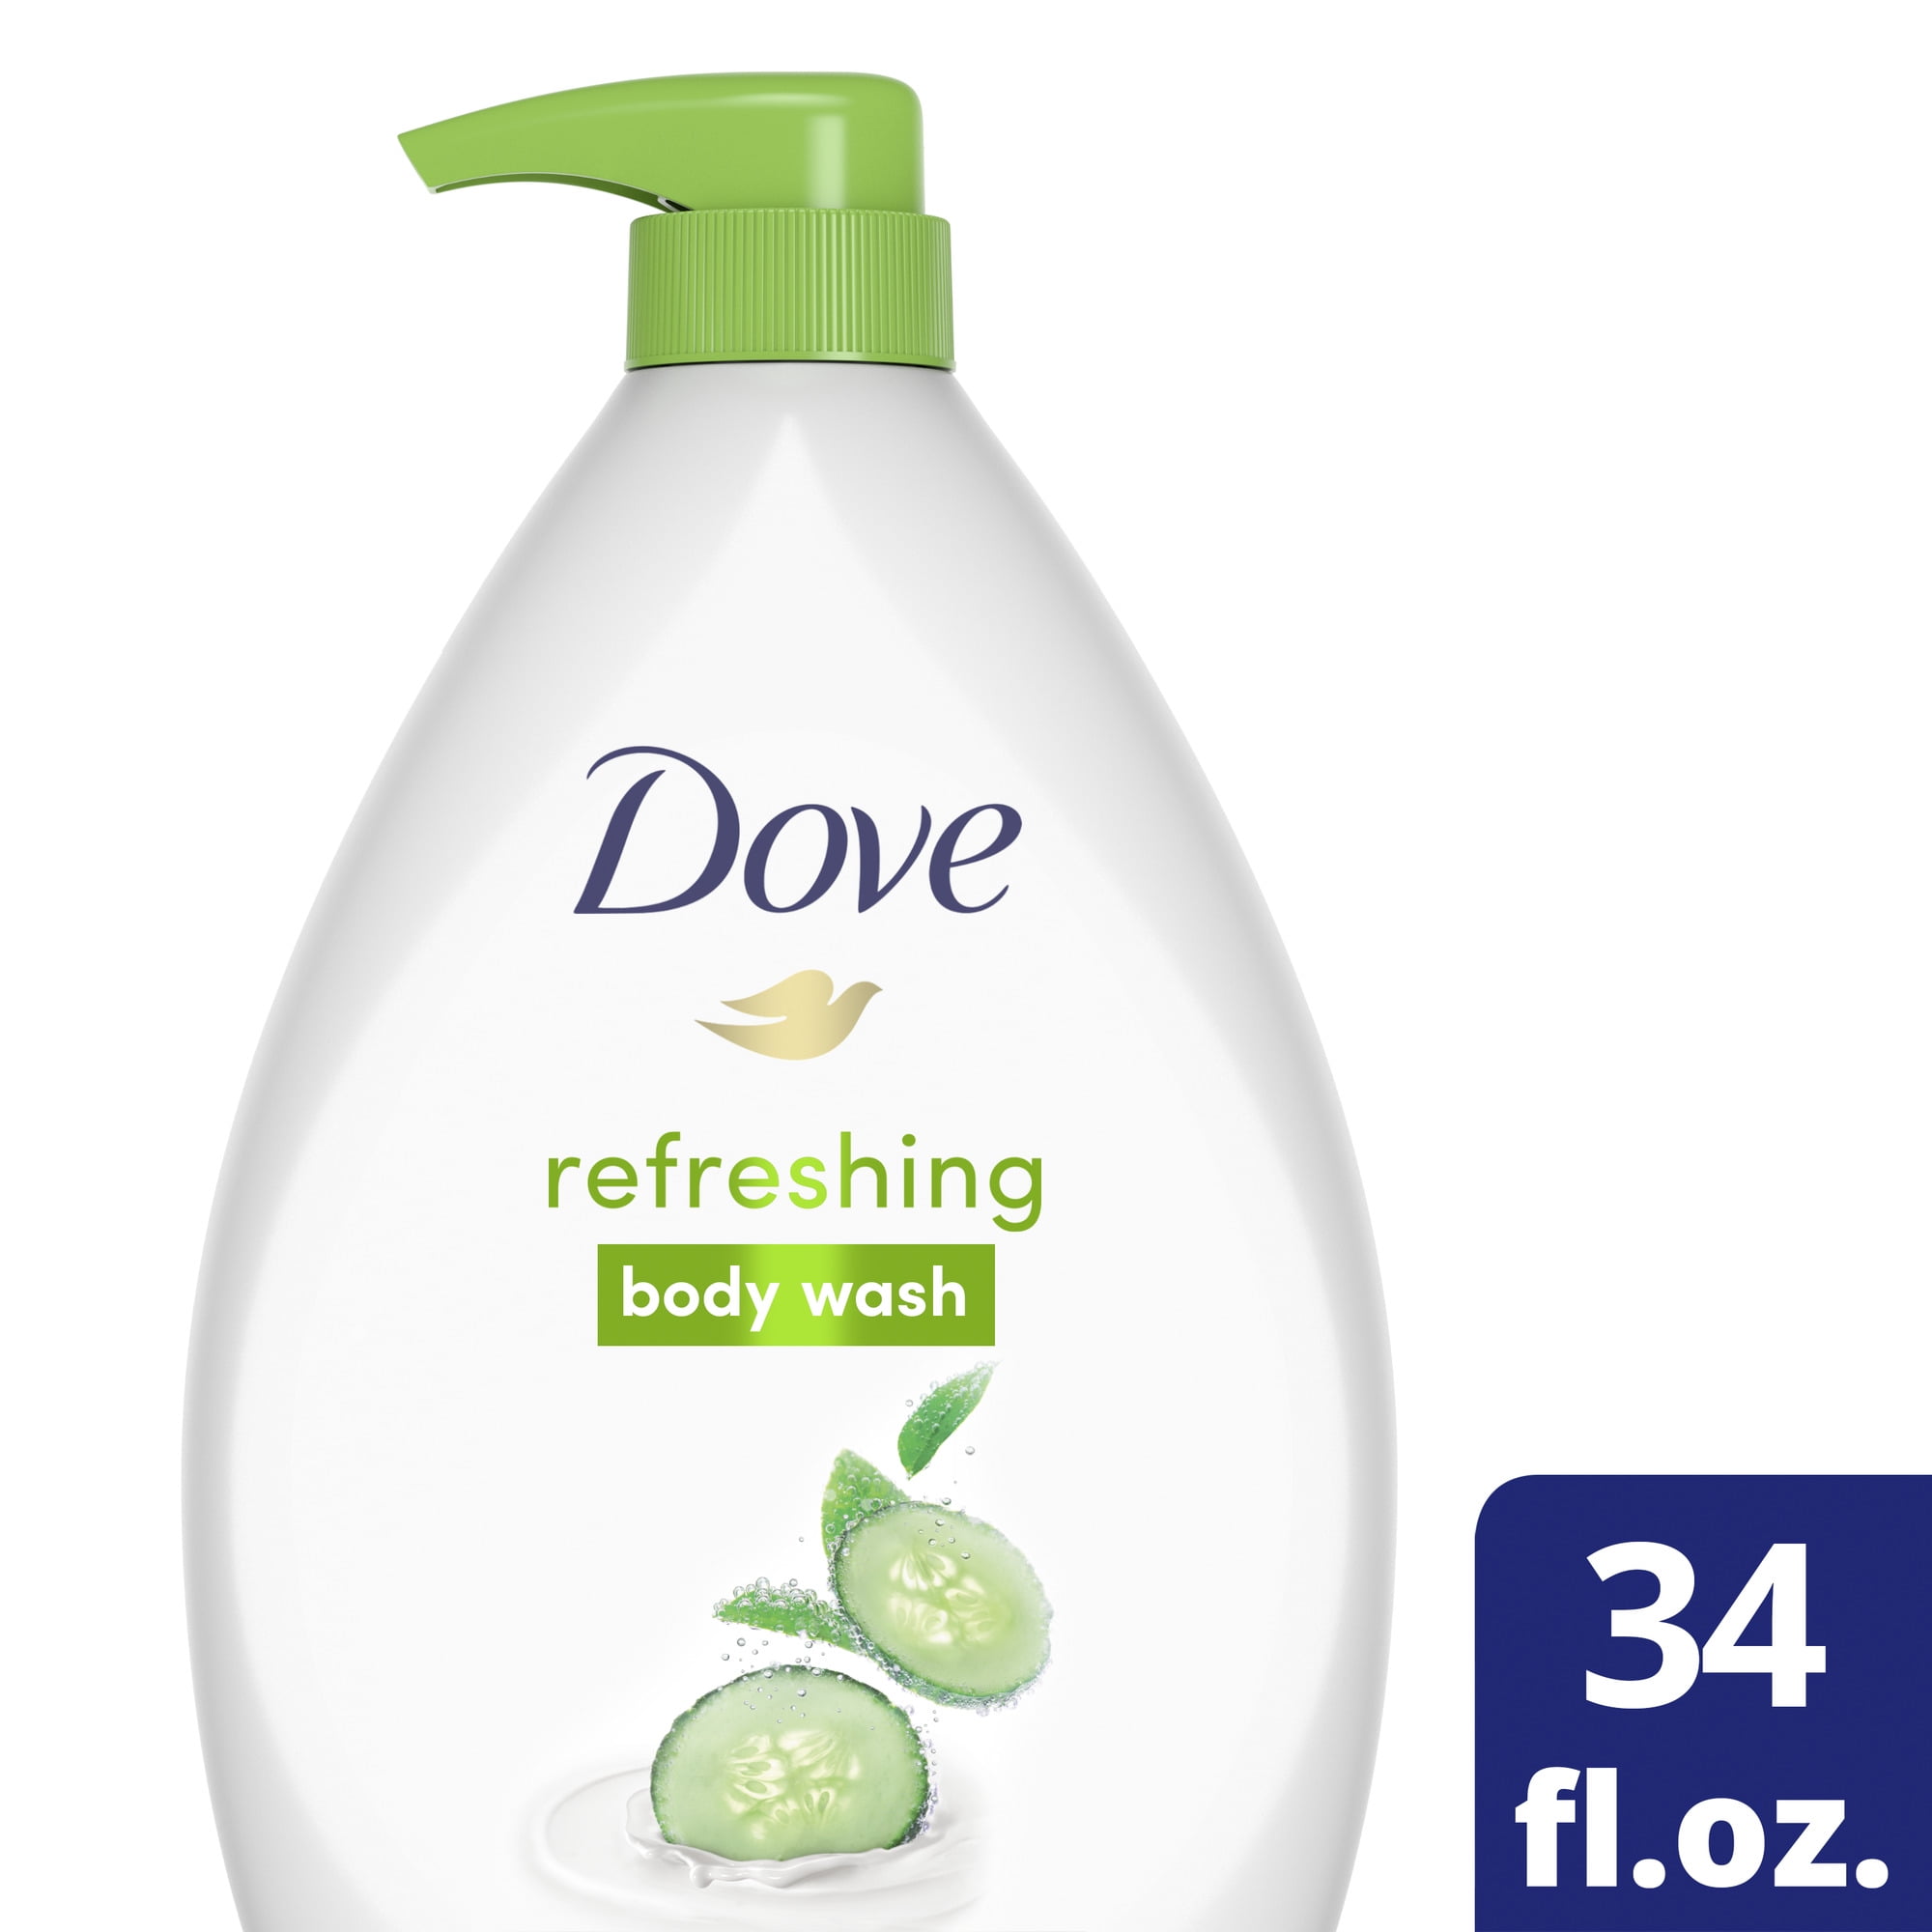 Dove Refreshing Liquid Body Wash with Pump Cucumber & Green Tea Cleanser, 34 oz